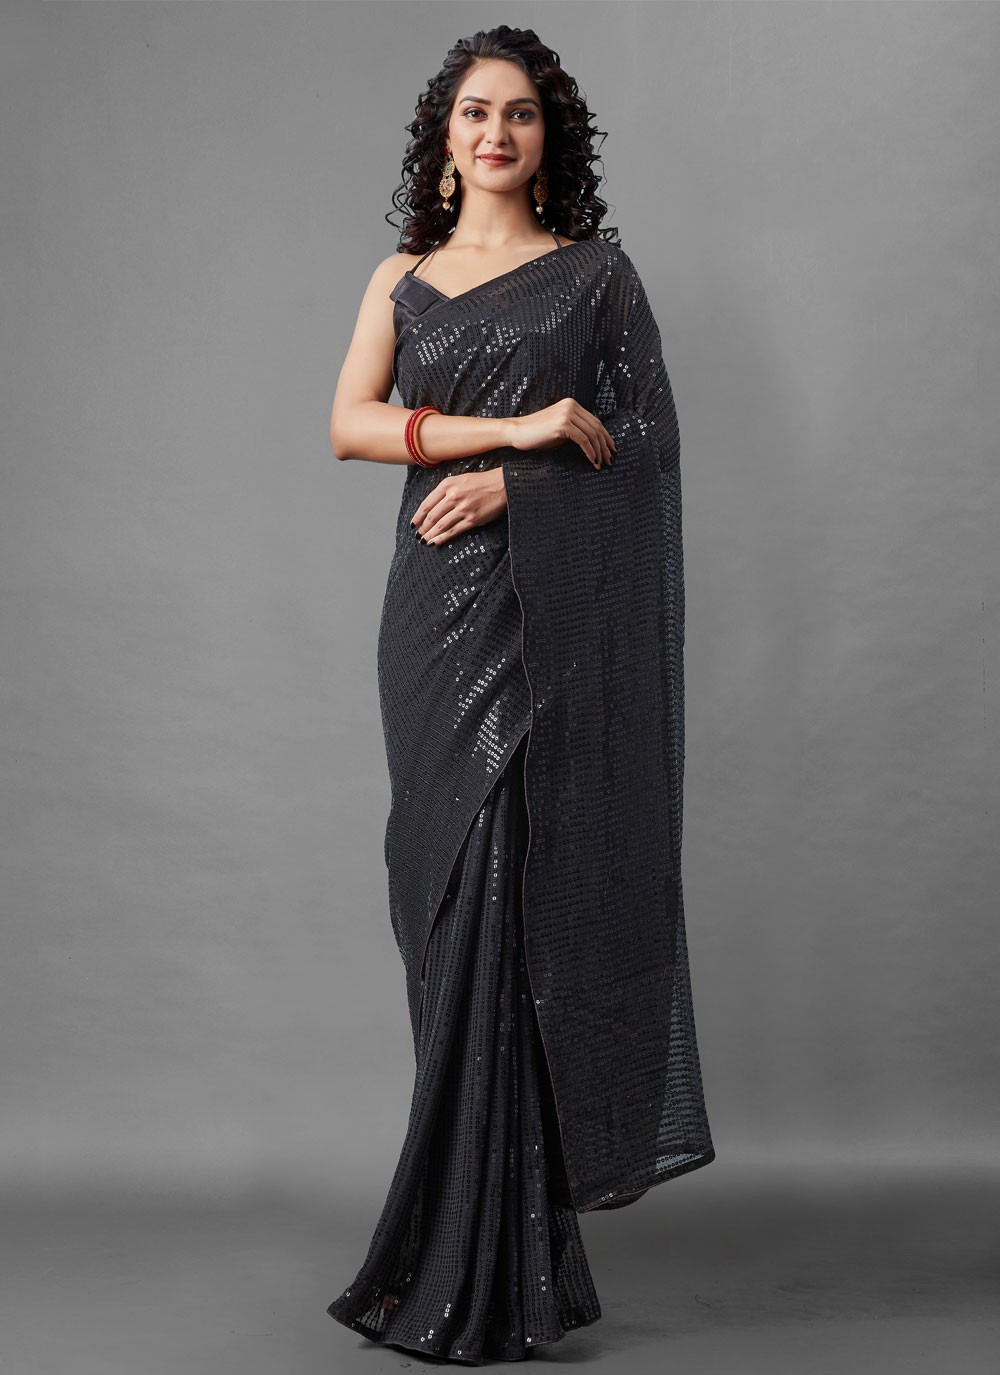 Lisa Ray in Black Designer Saree and Blouse - Saree Blouse Patterns